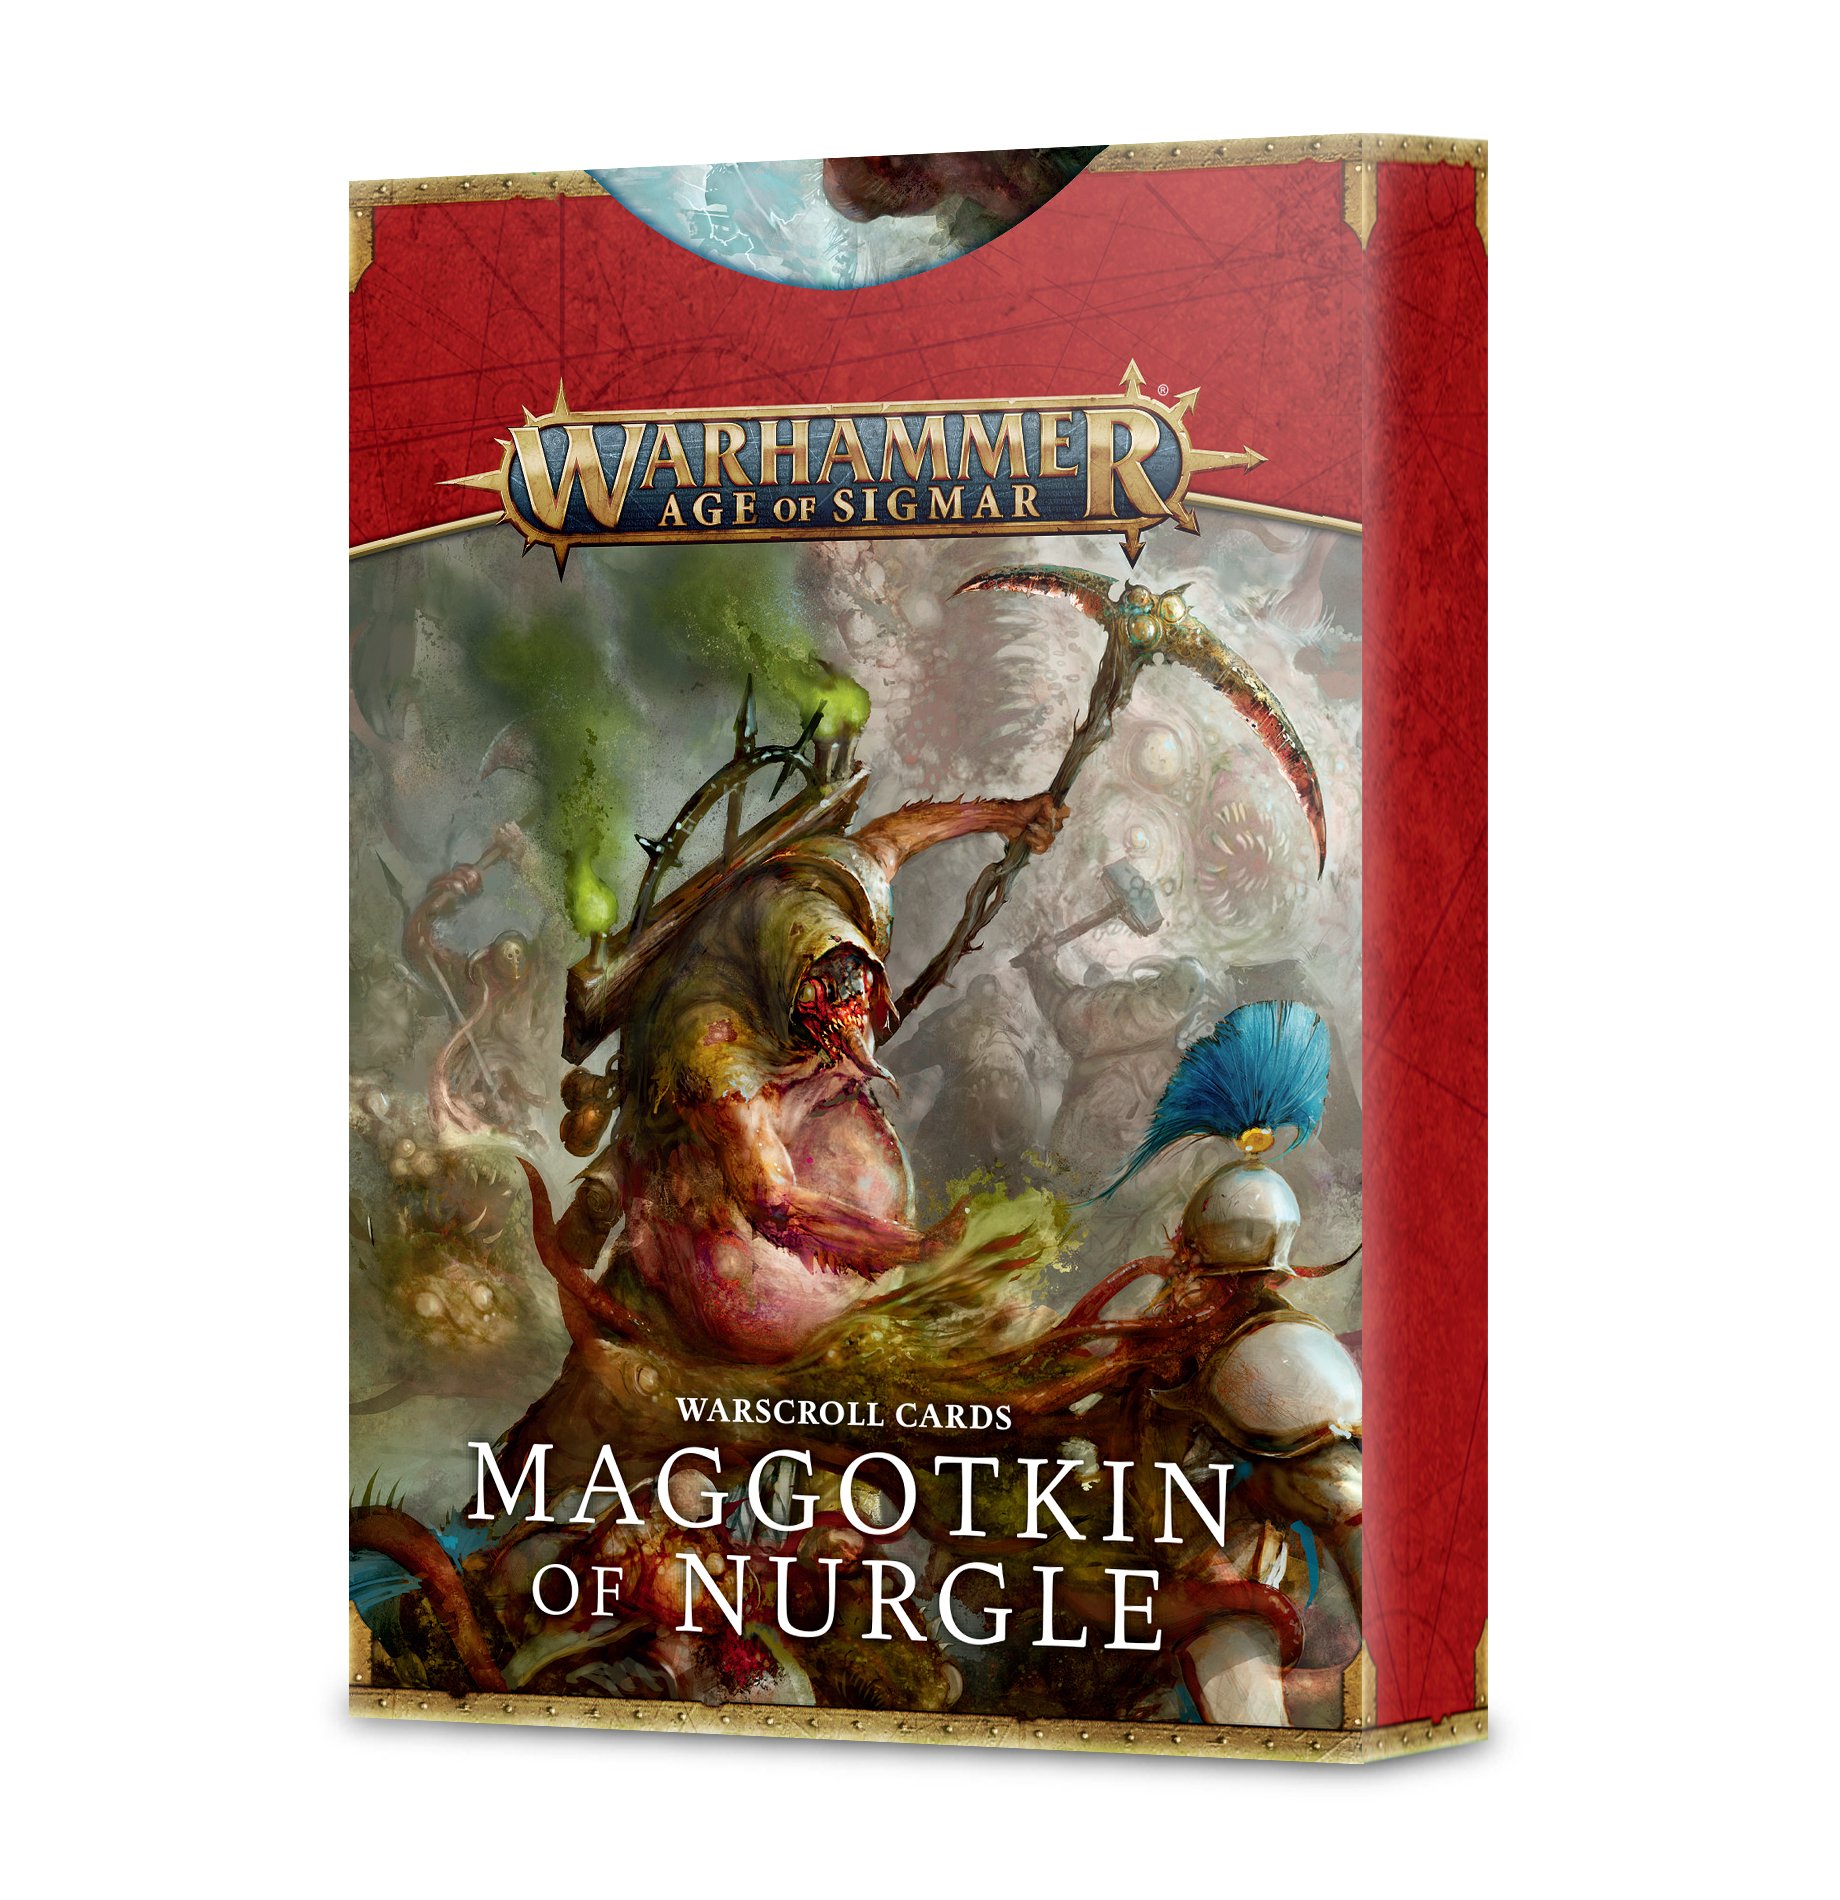 Warhammer Age of Sigmar: Warscroll Cards: Maggotkin of Nurgle 